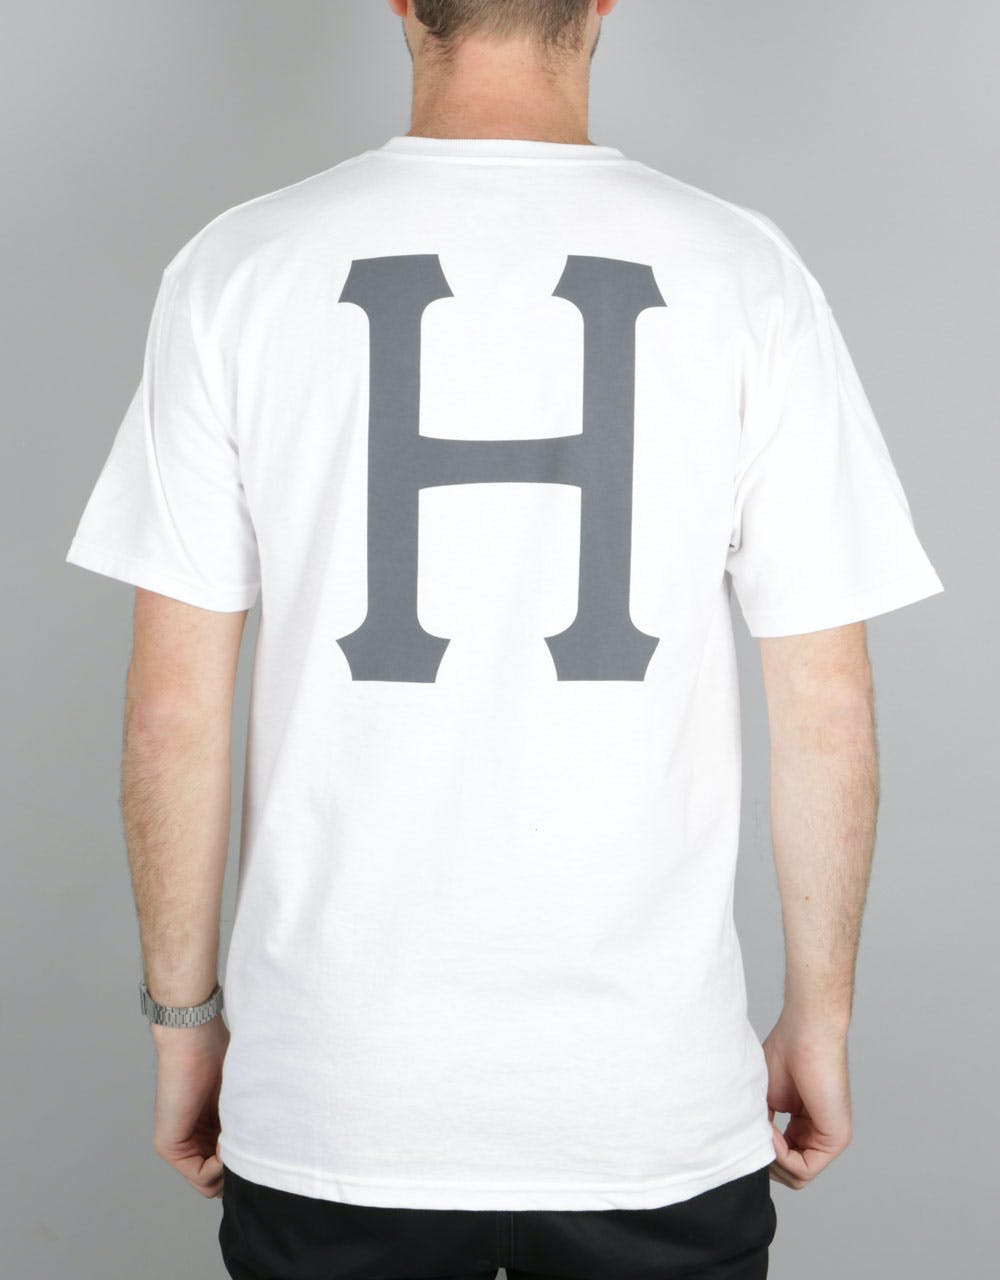 HUF Classic H T-Shirt - White/Black